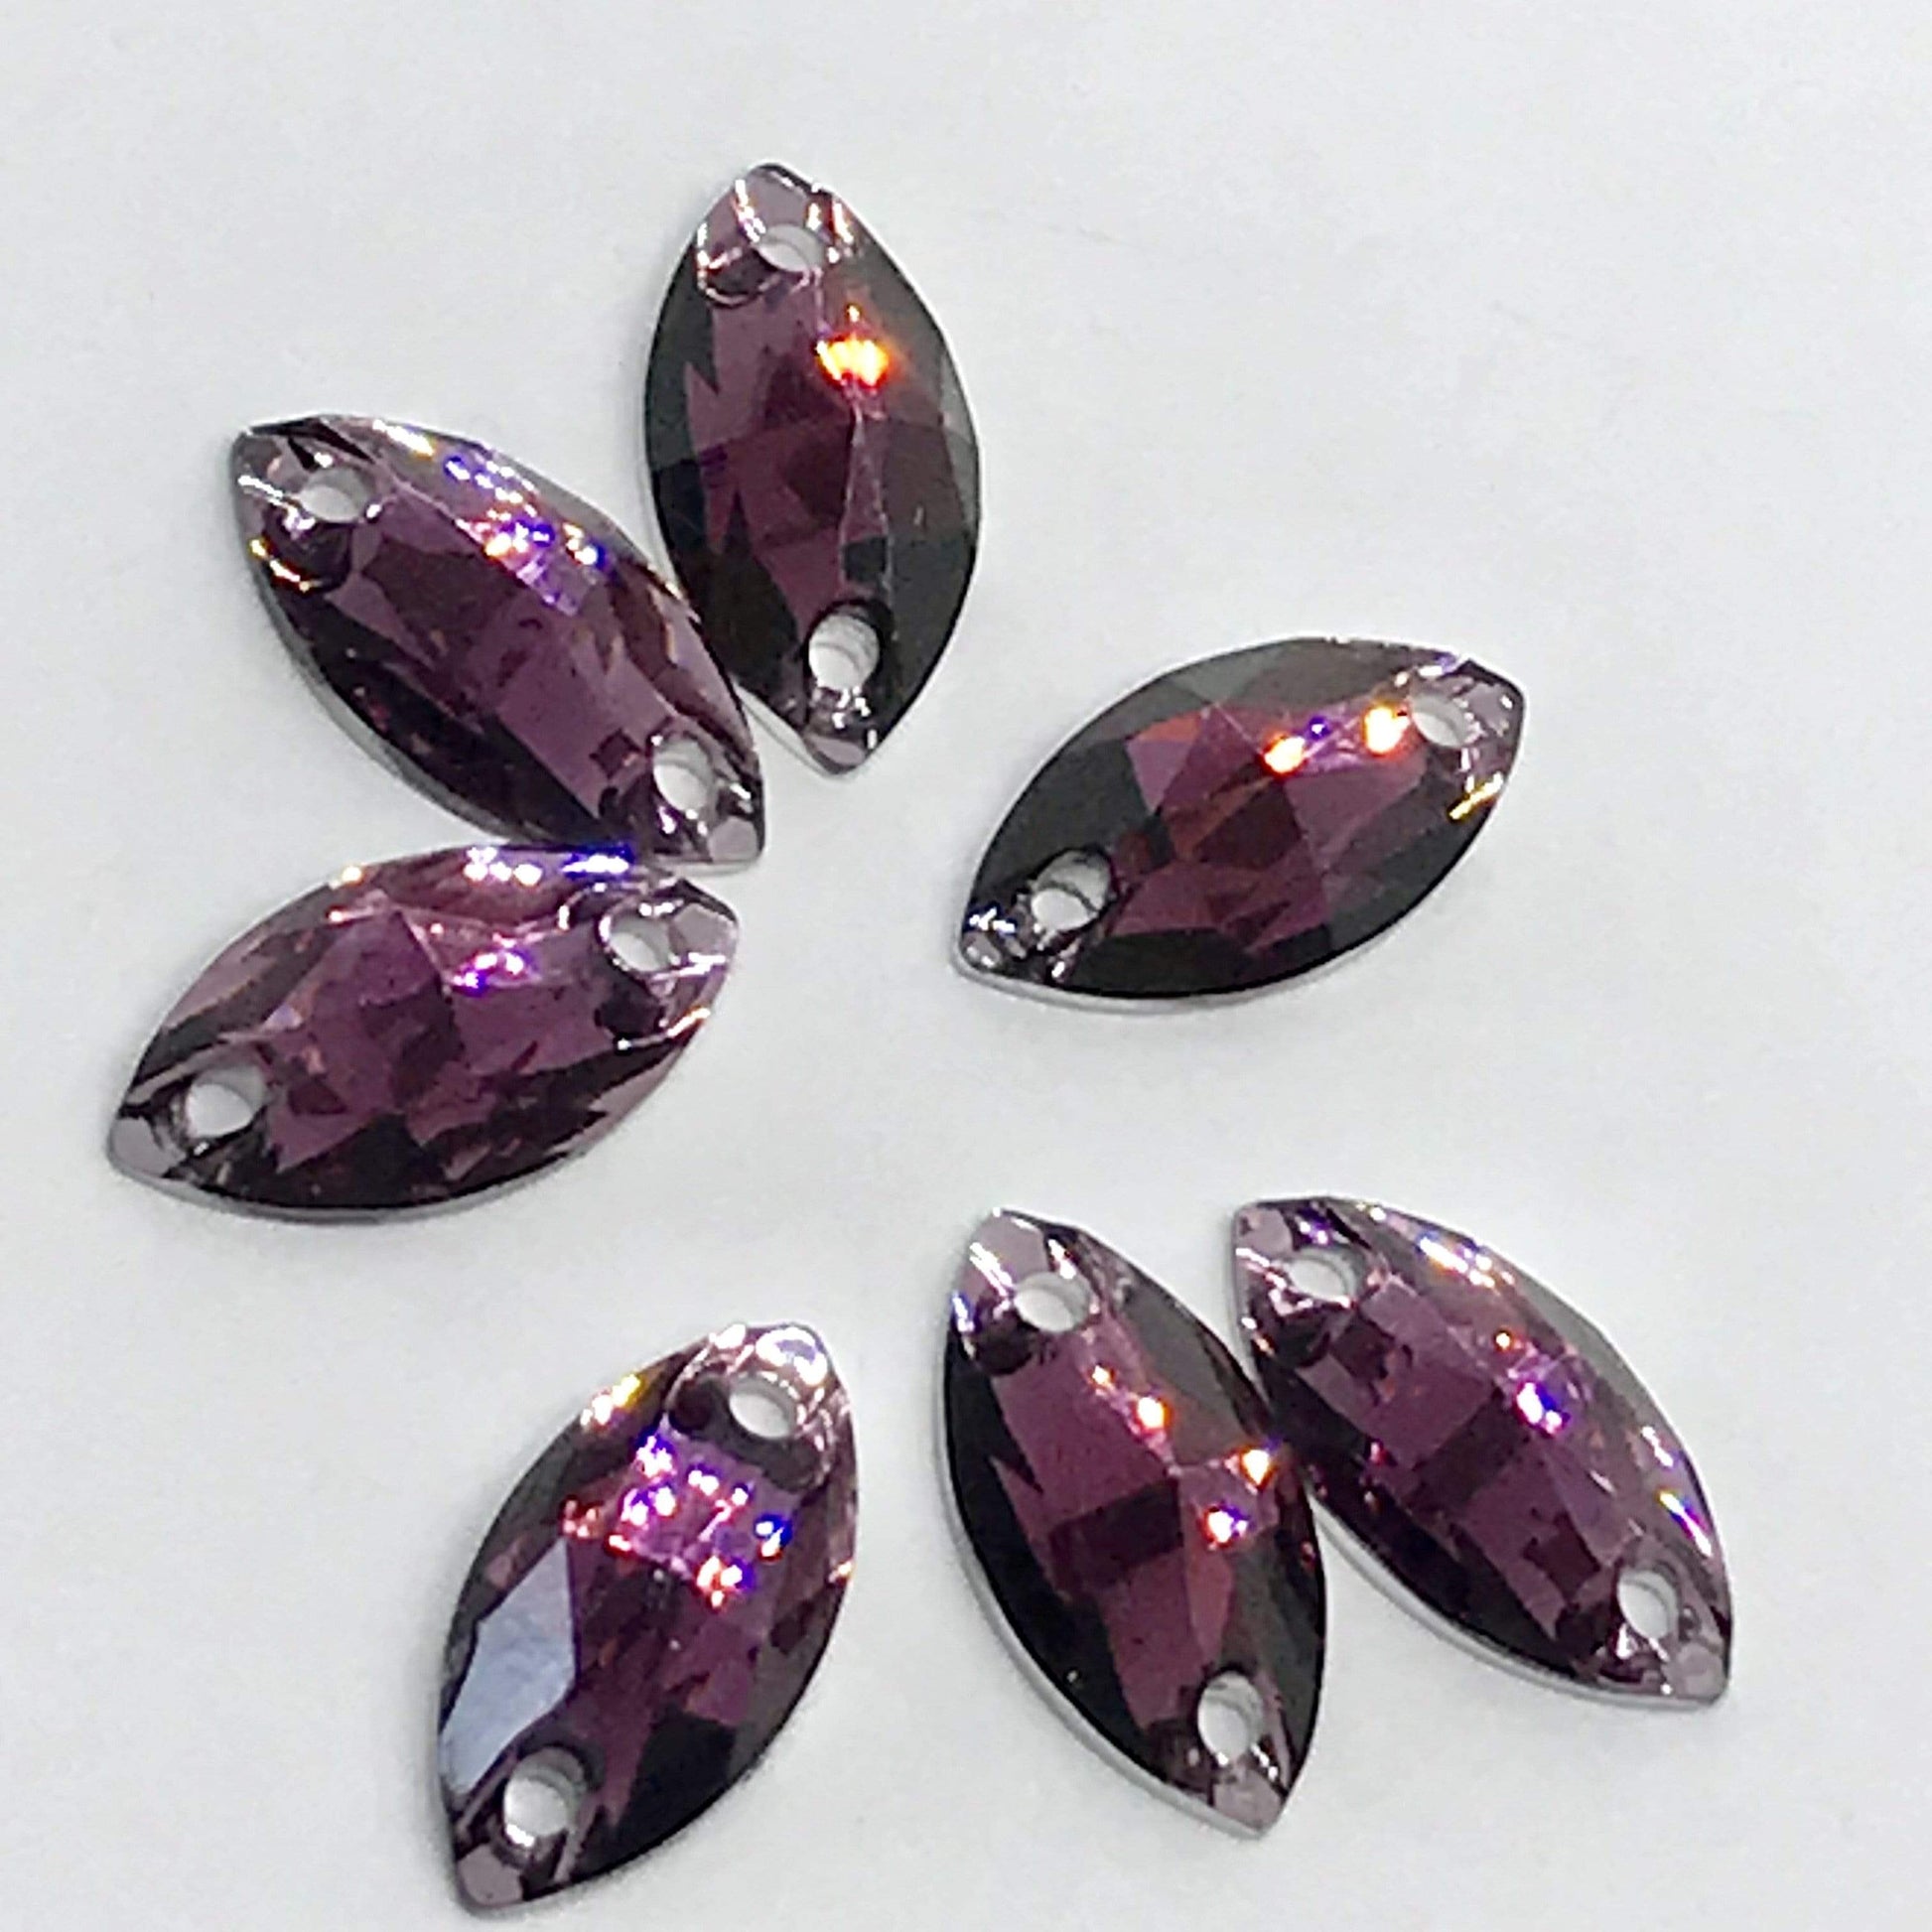 Sundaylace Creations & Bling Resin Gems 7*12mm Mini Navette Resin Gem, sew on (Sold in sets of 12 gems)